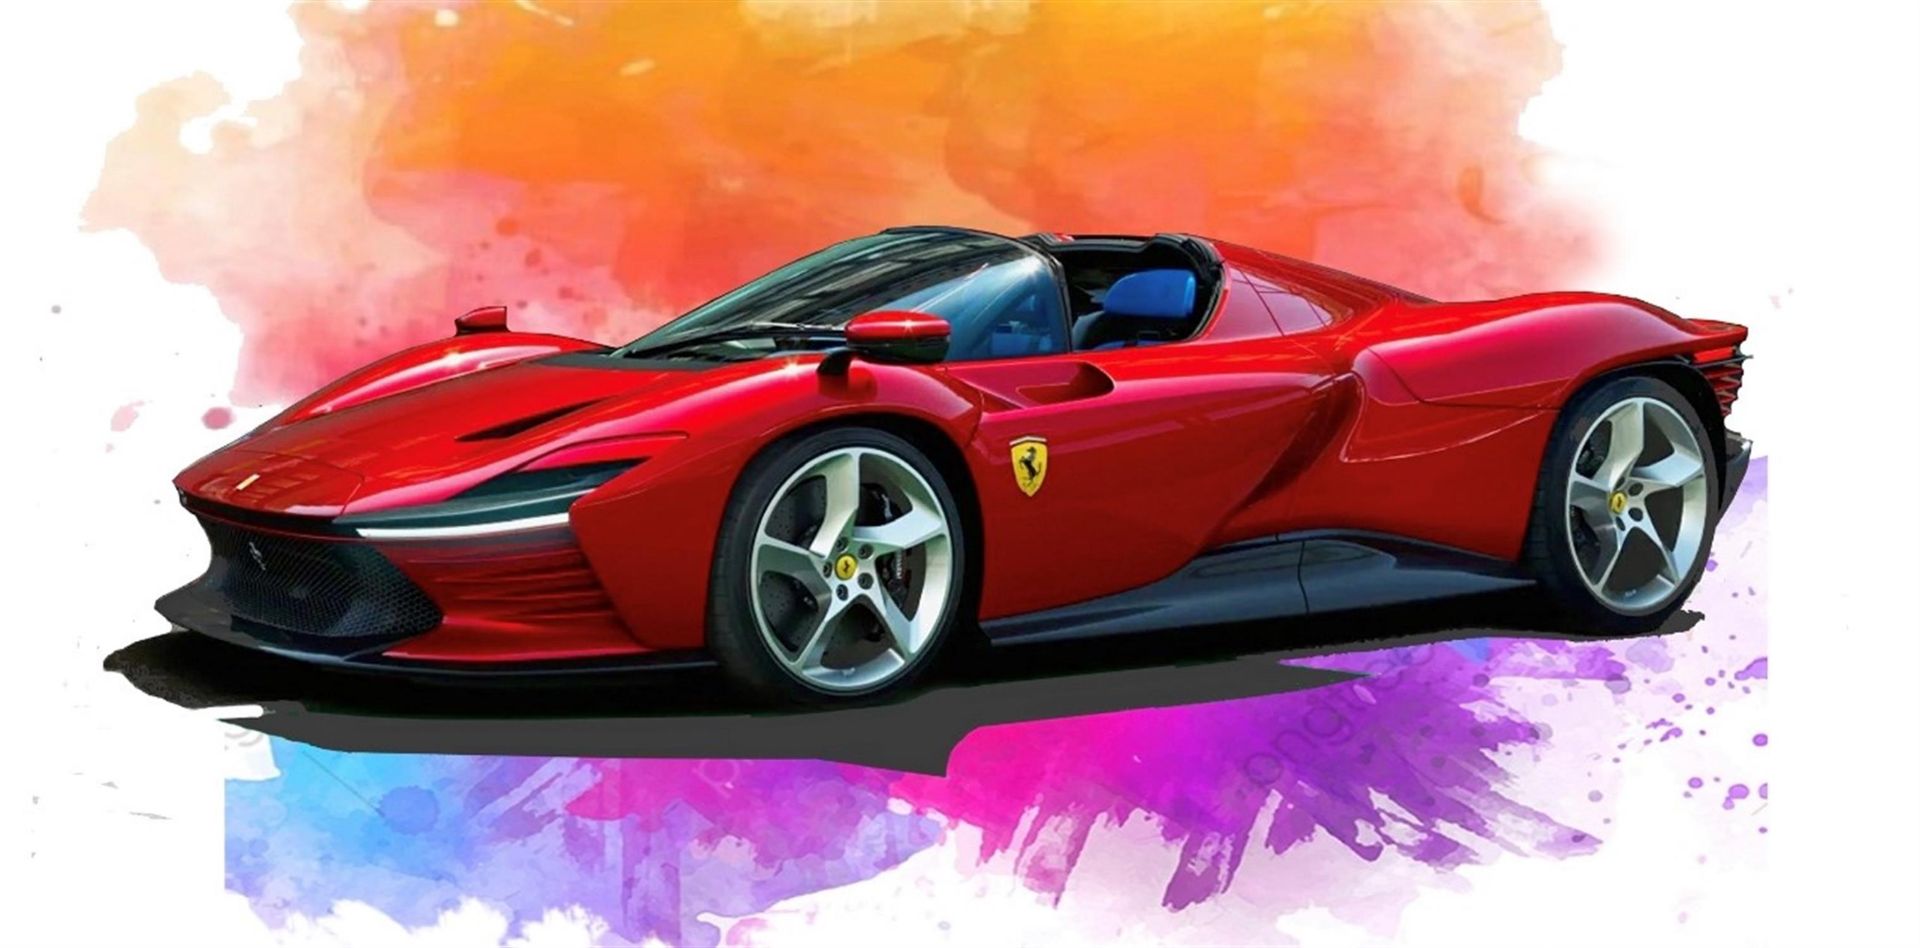 Ferrari Daytona SP3 in Acrylics - Image 2 of 2